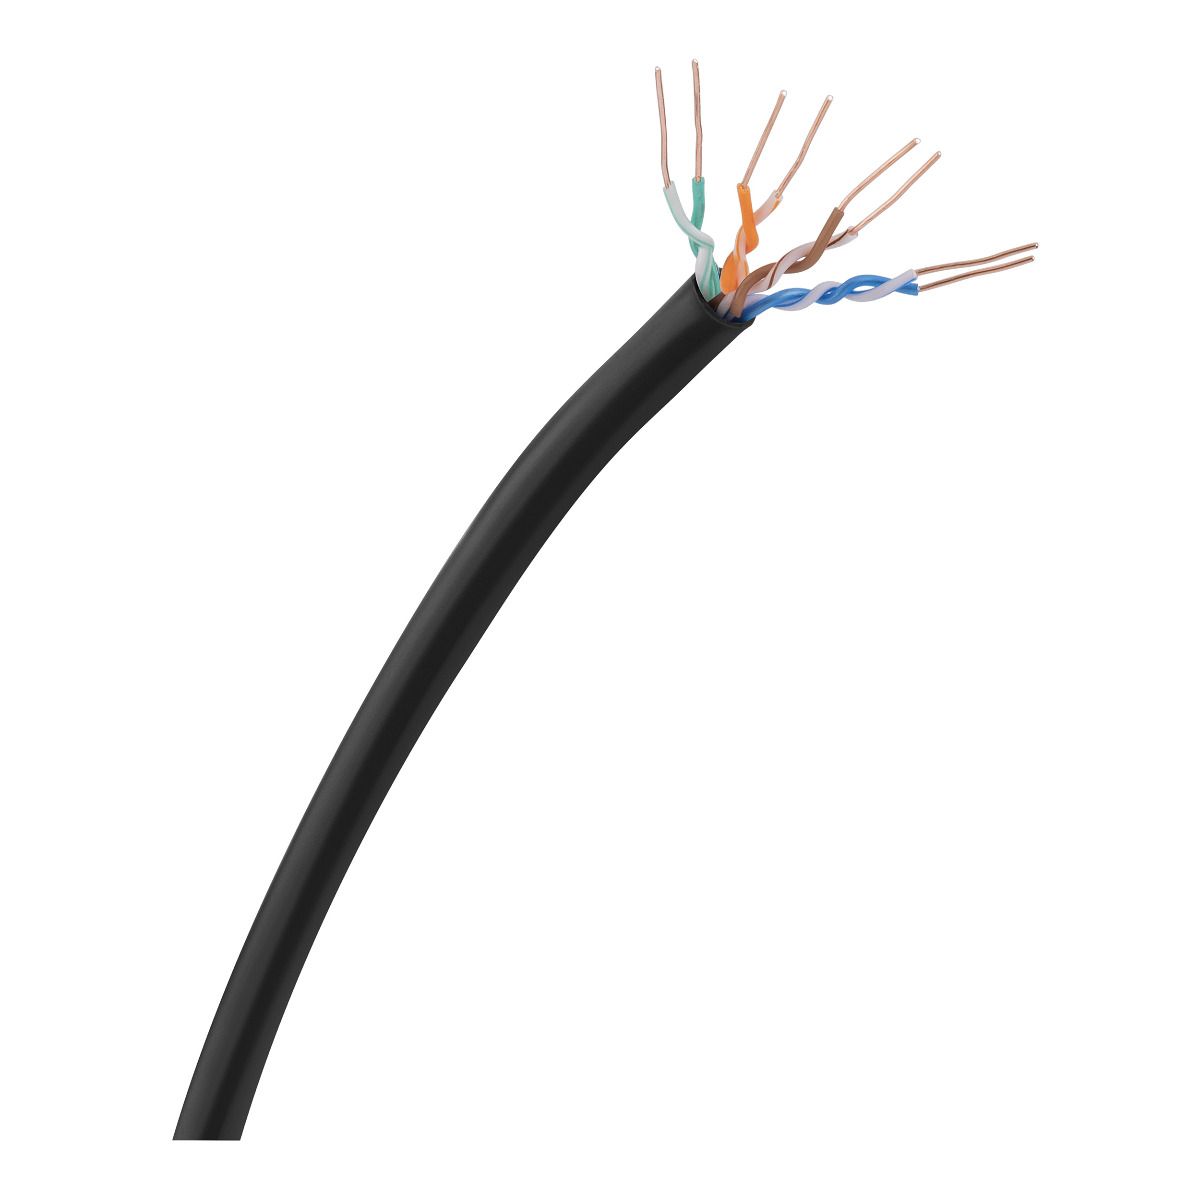 Encantador Penélope Condensar Cable UTP CAT 5e para intemperie, negro